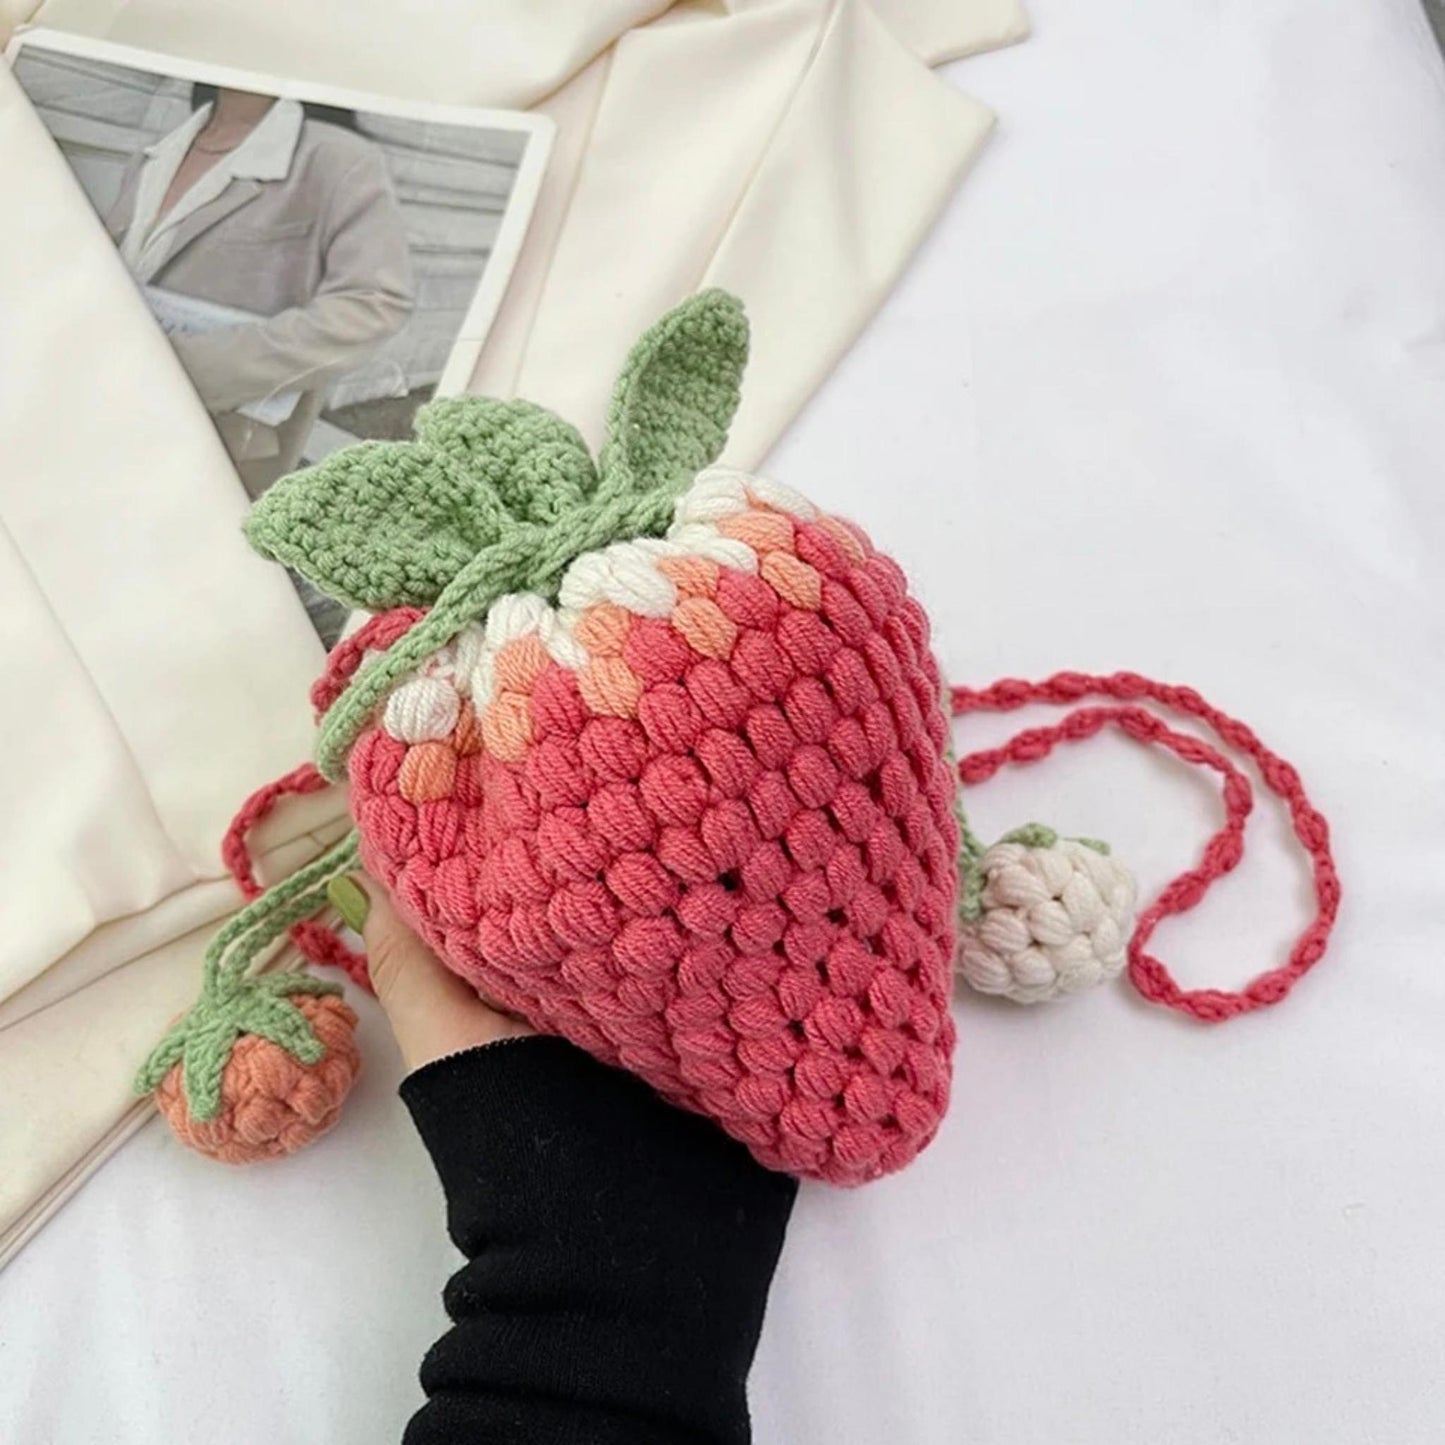 Crochet Strawberry Handbag